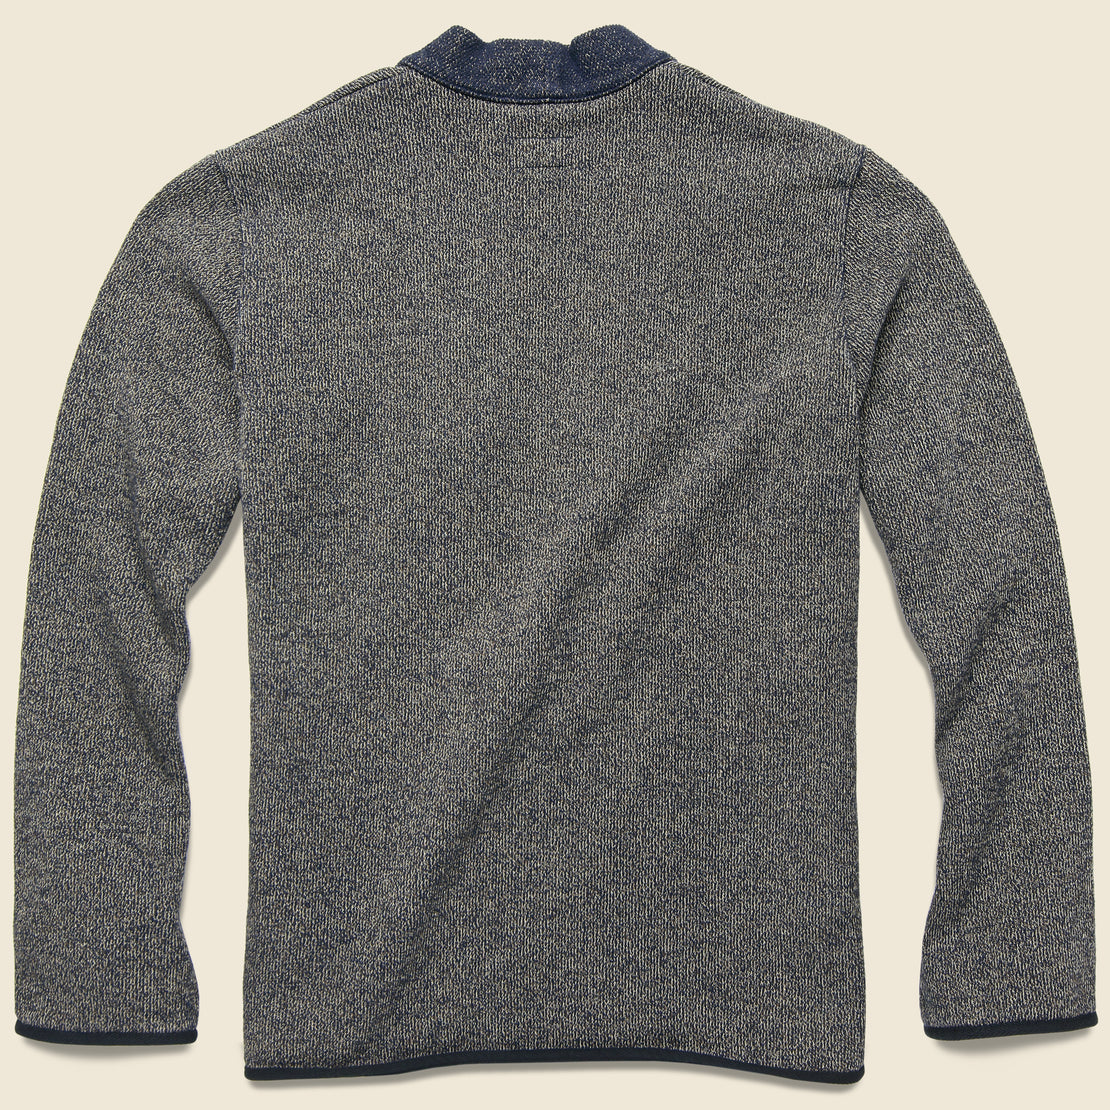 Kakashi Beach Knit Cardigan - Charcoal - Kapital - STAG Provisions - Tops - Sweater